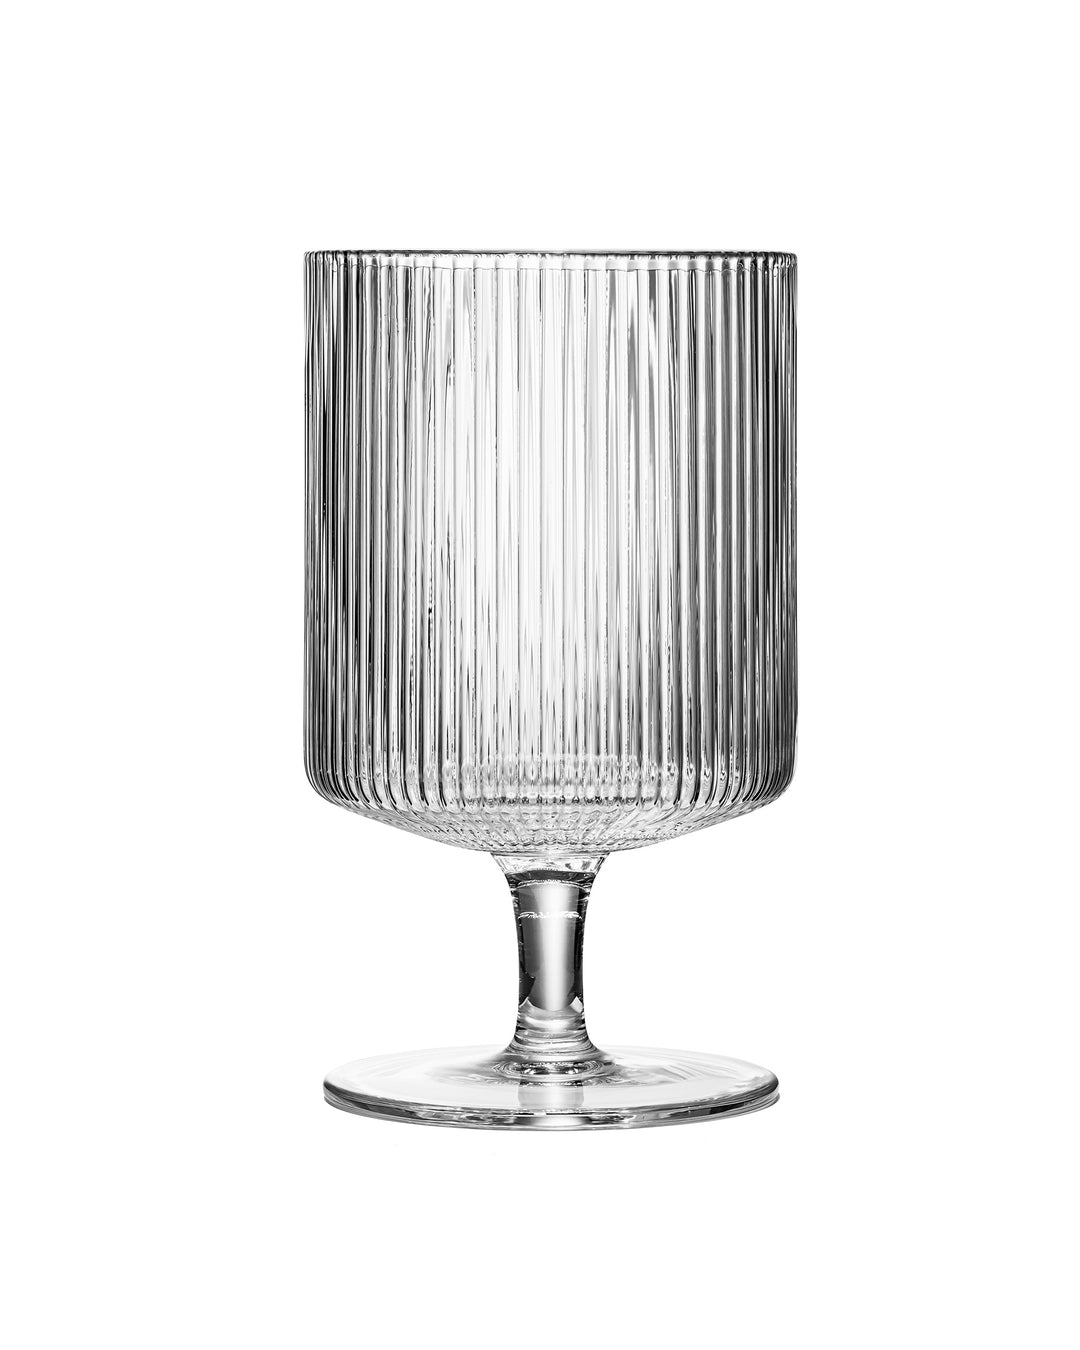 GLASSIQUE CADEAU Vintage Art Deco Highball Ribbed Cocktail Glasses